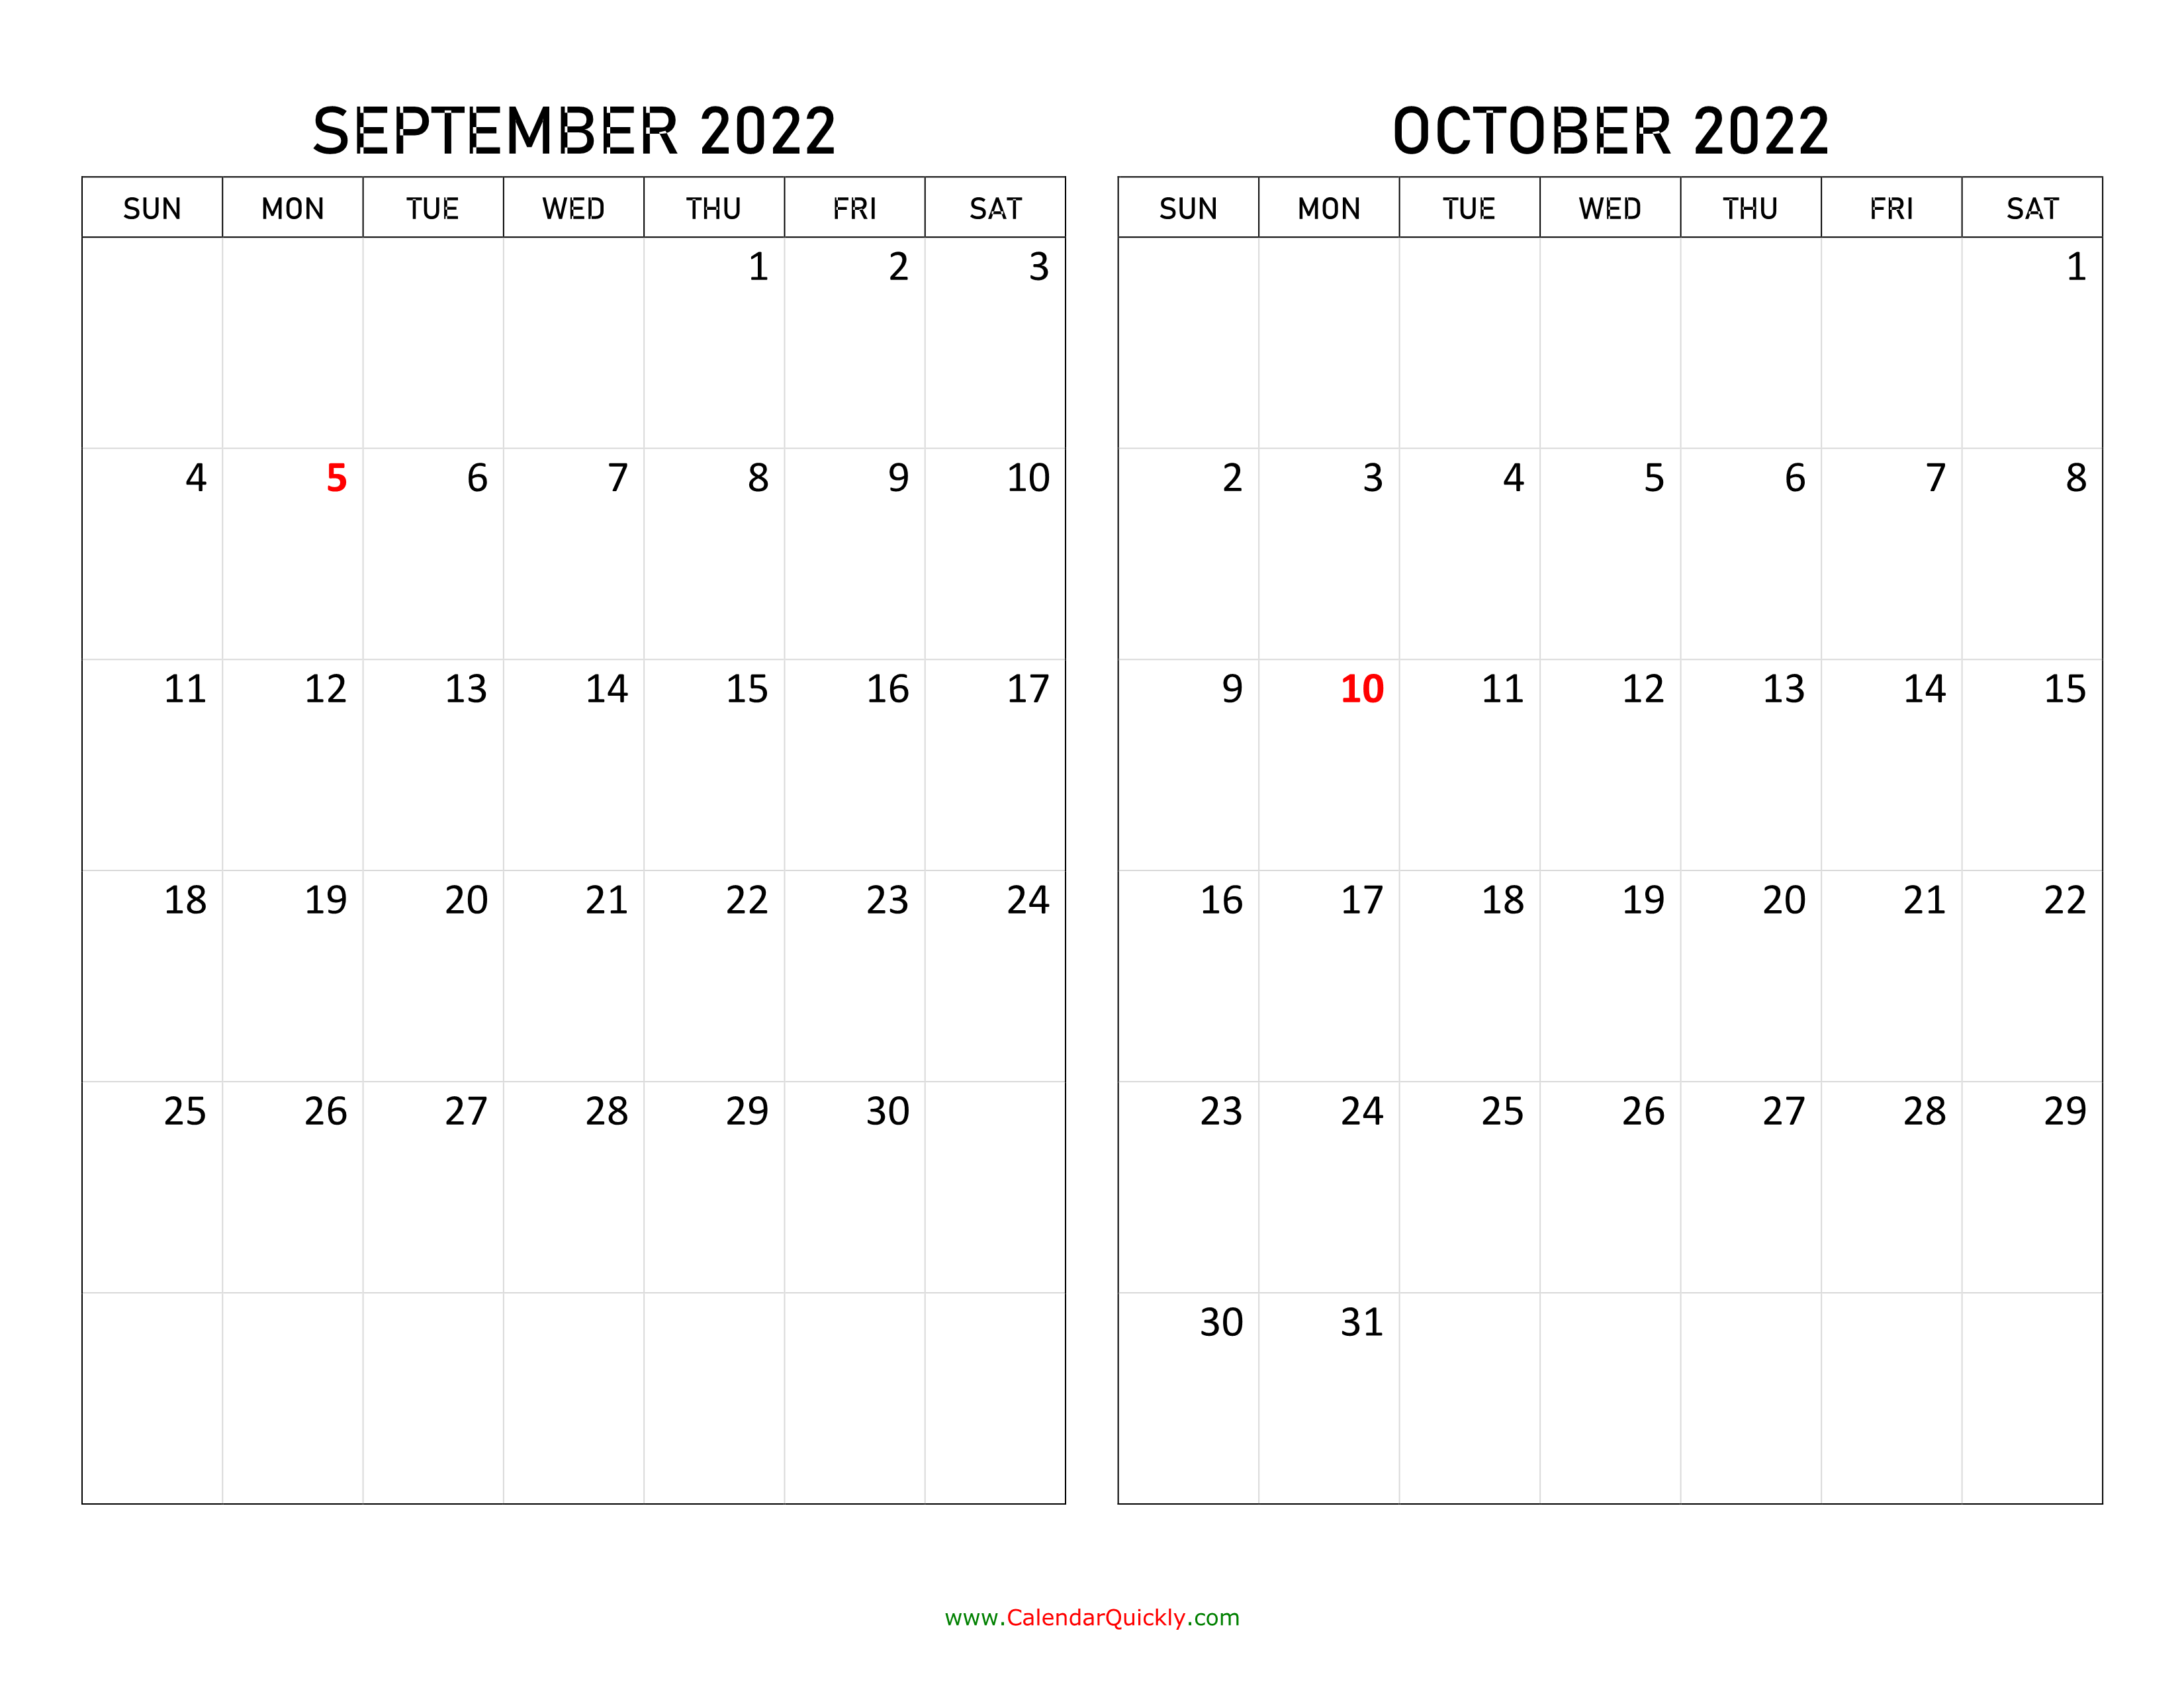 September and October 2022 Calendar Calendar Quickly